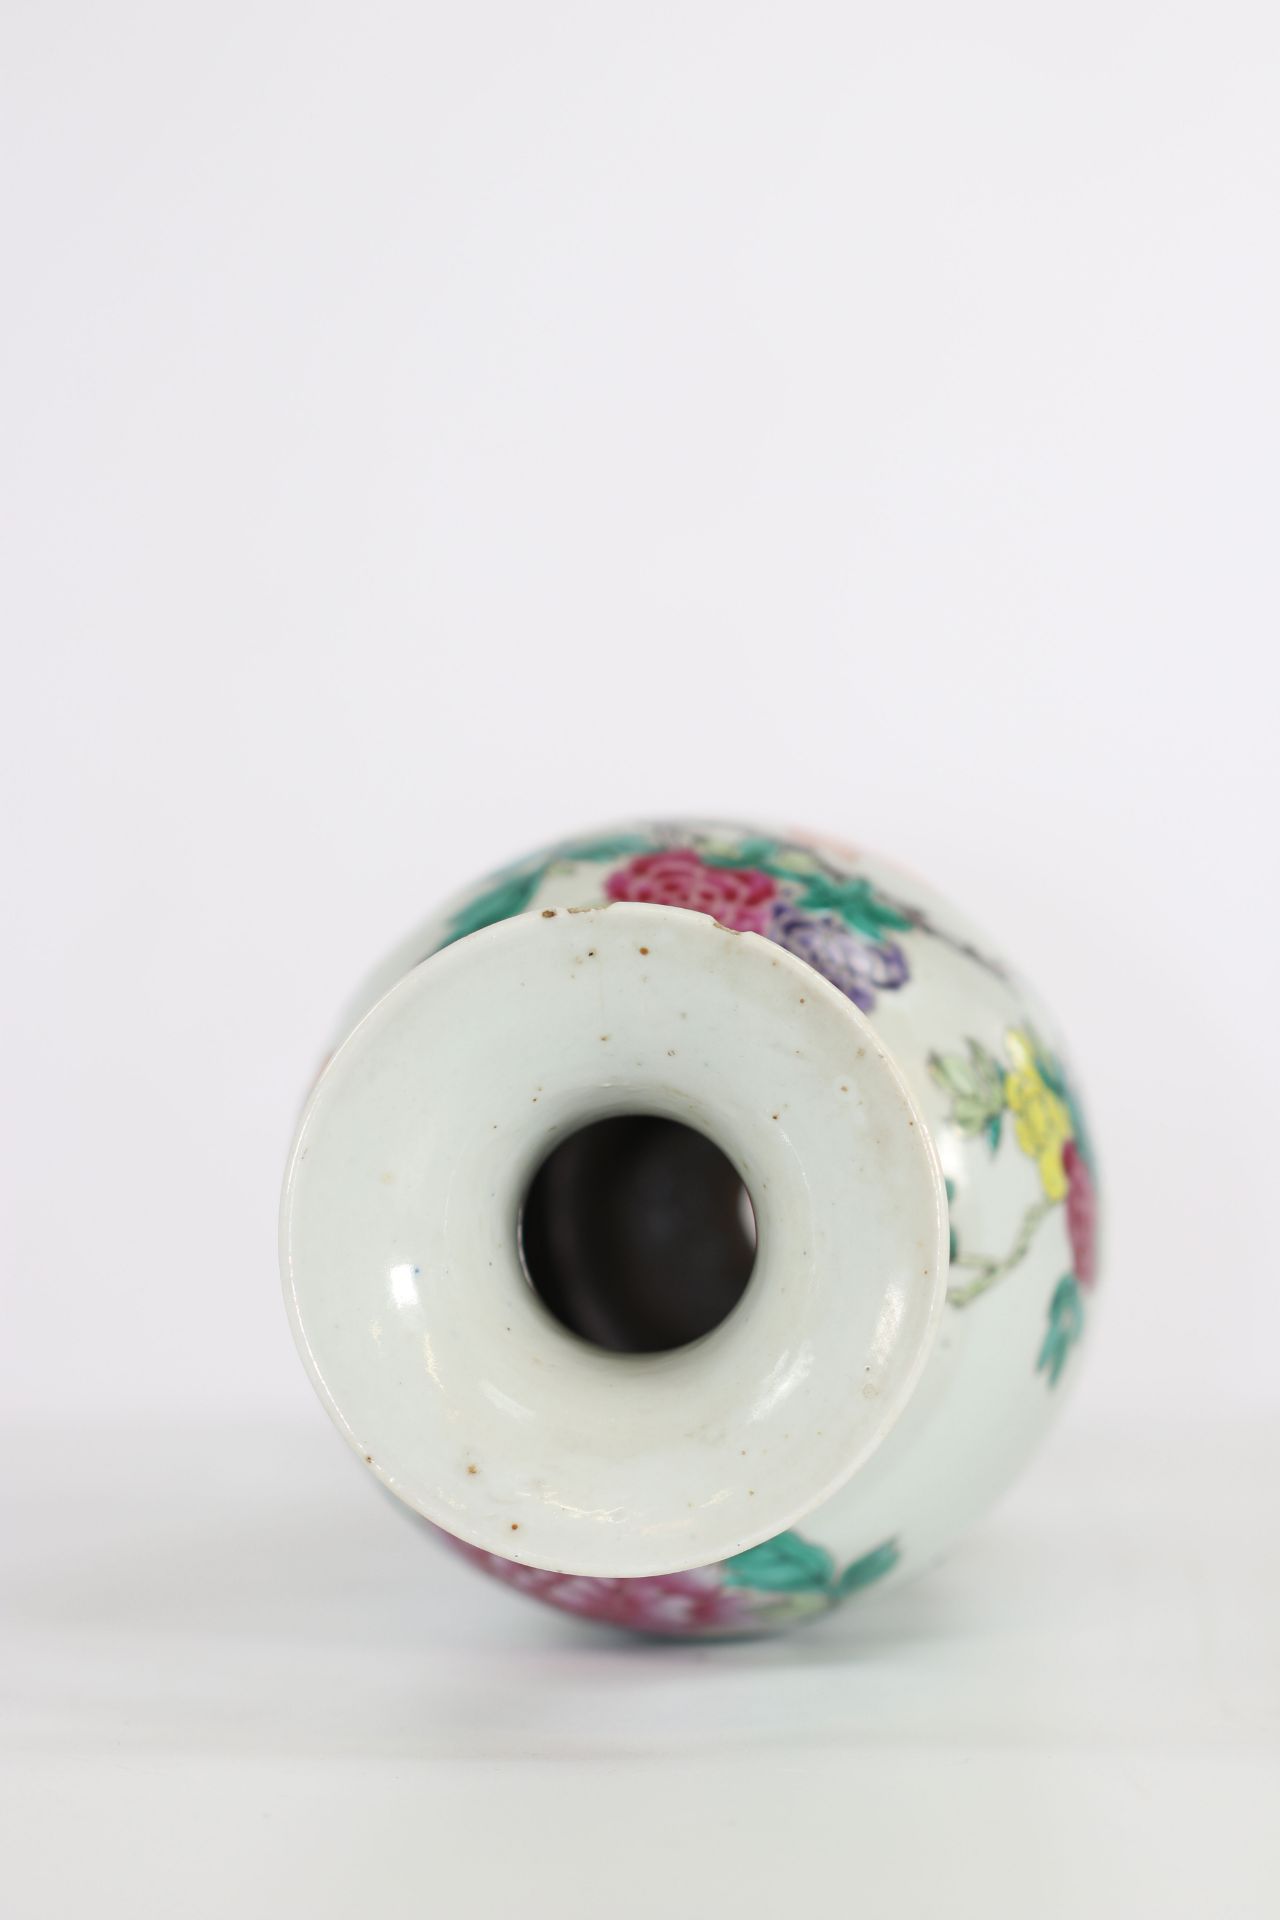 China famille rose porcelain vase flower decoration - Image 5 of 6